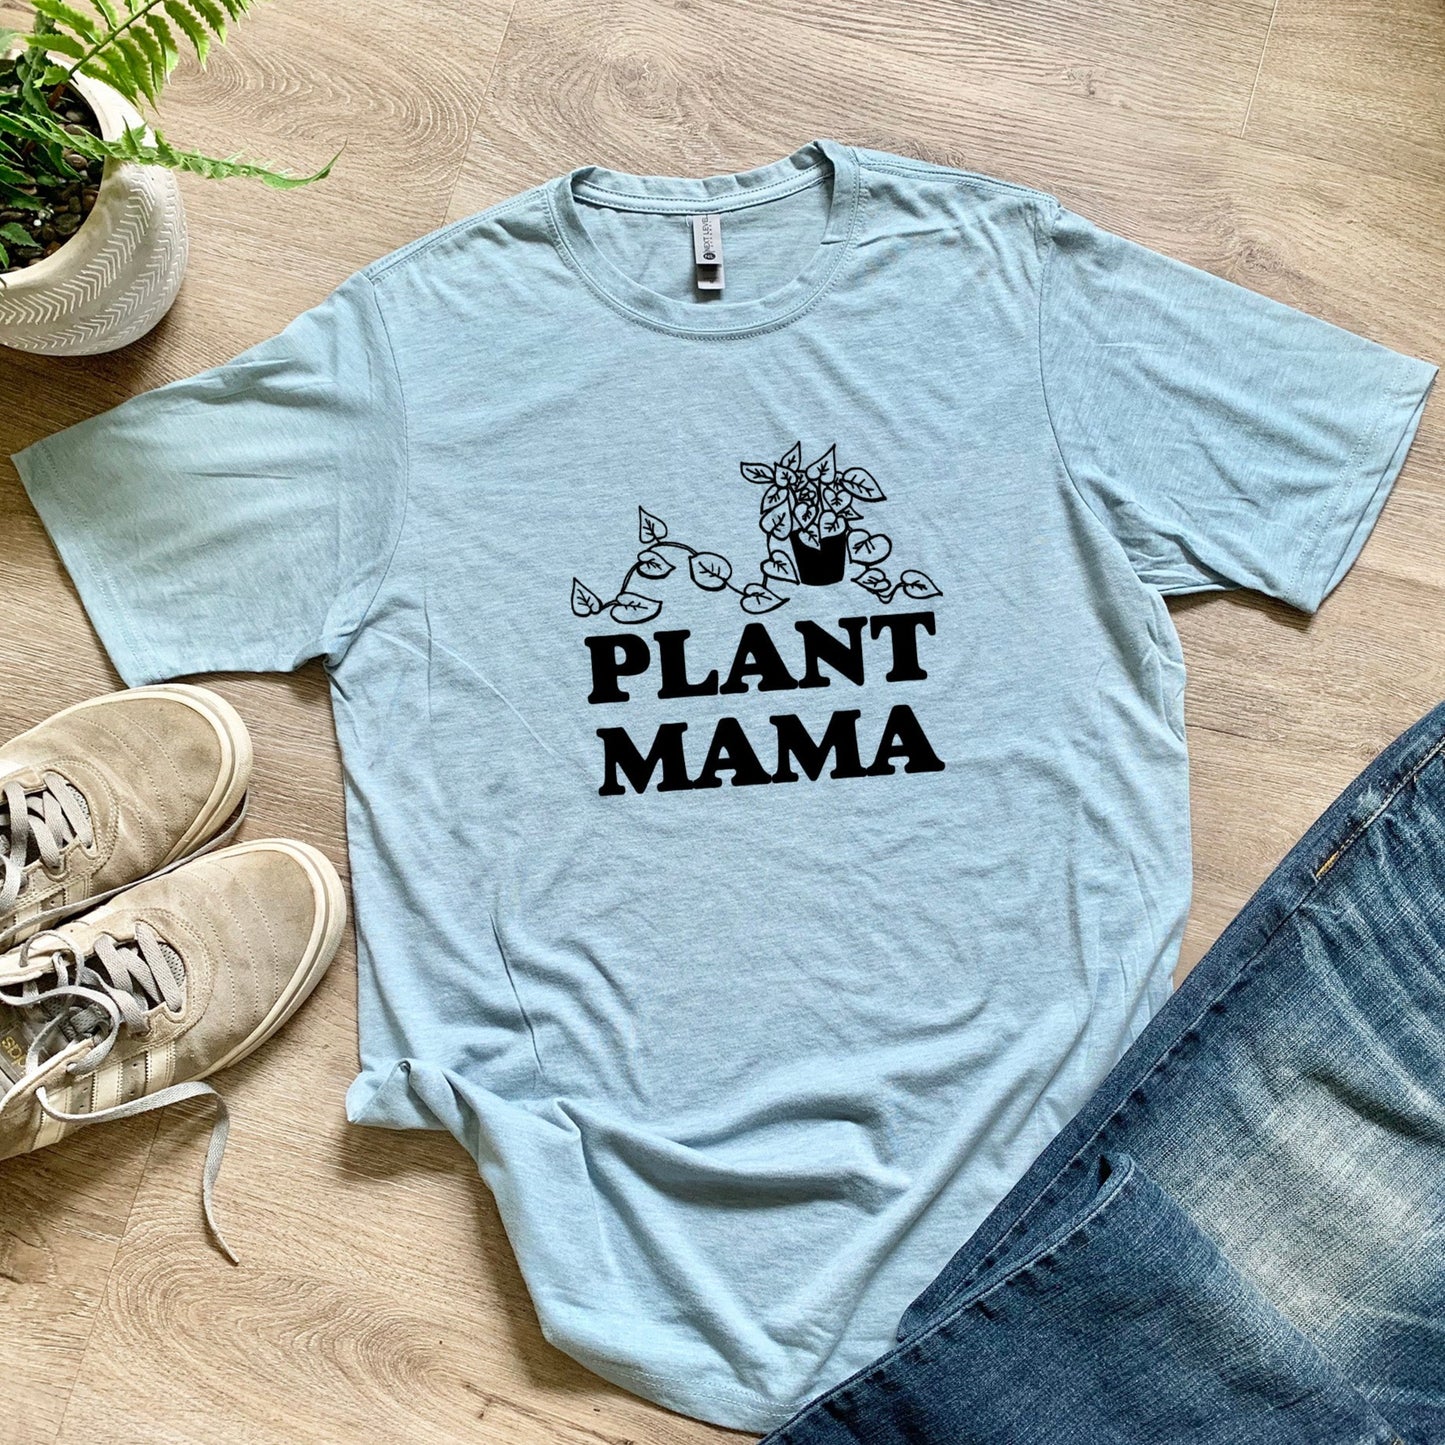 Plant Mama - Men's / Unisex Tee - Stonewash Blue or Sage